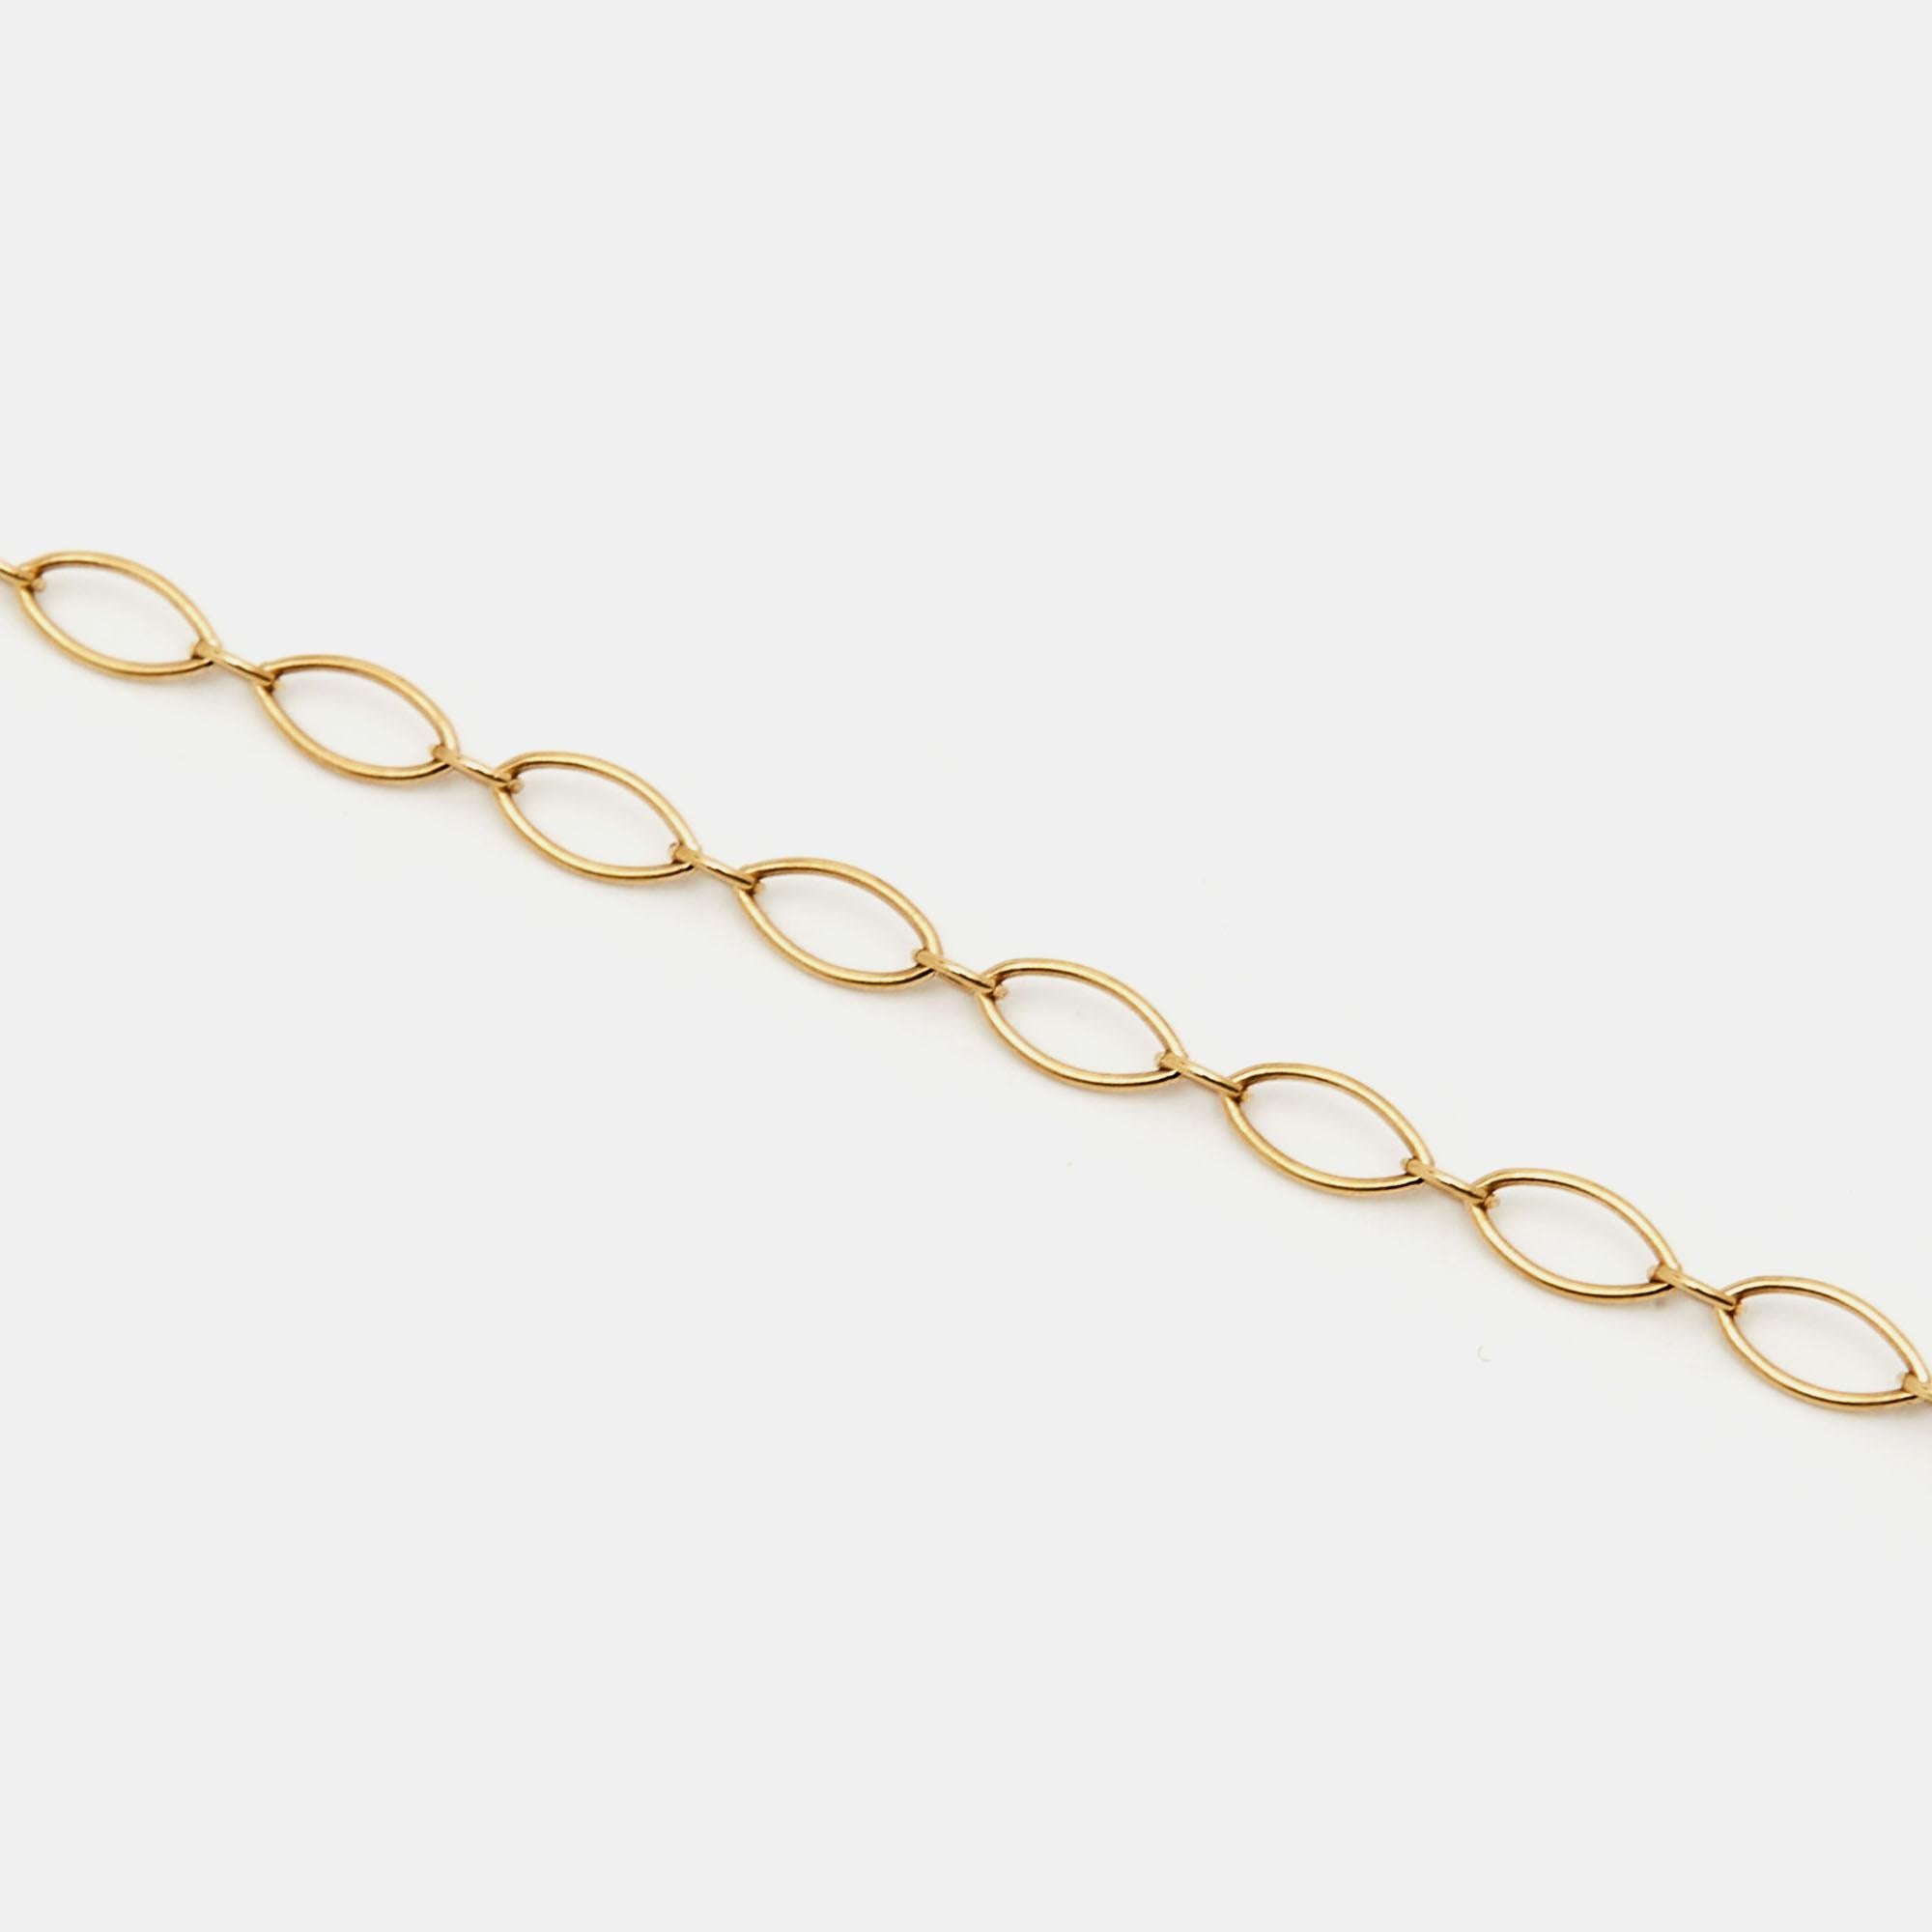 Uncut Tiffany & Co. Crown Key Diamond 18k Two Tone Gold Pendant Necklace For Sale